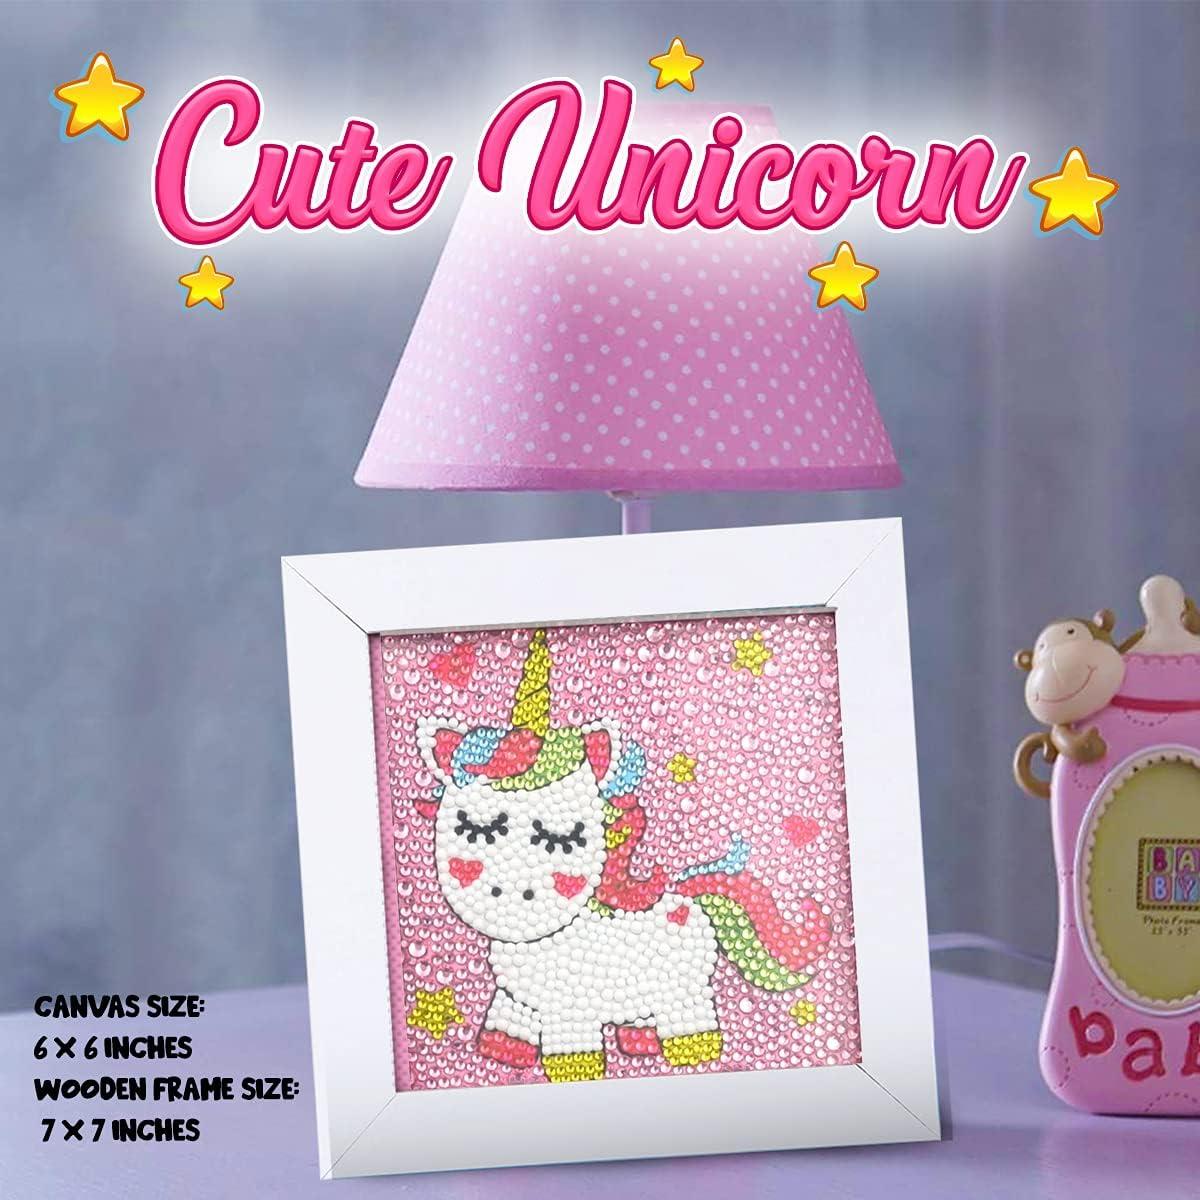 Innofans Diamond Painting Kit for Kids - Unicorn 5D Diamond Dotz